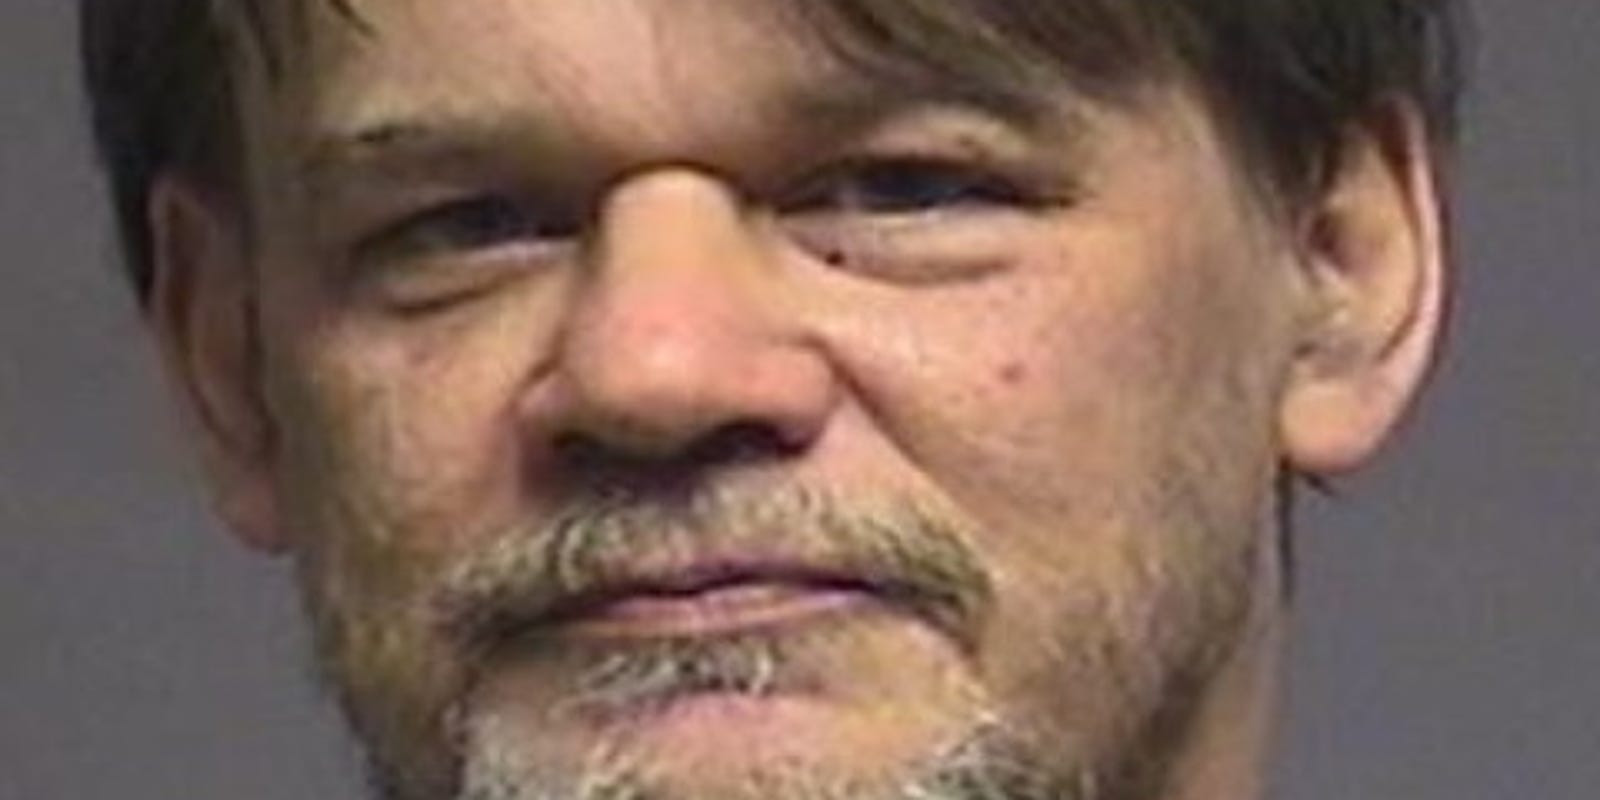 Under 6 Porn - Endicott man had thousands of child porn images, sentenced ...